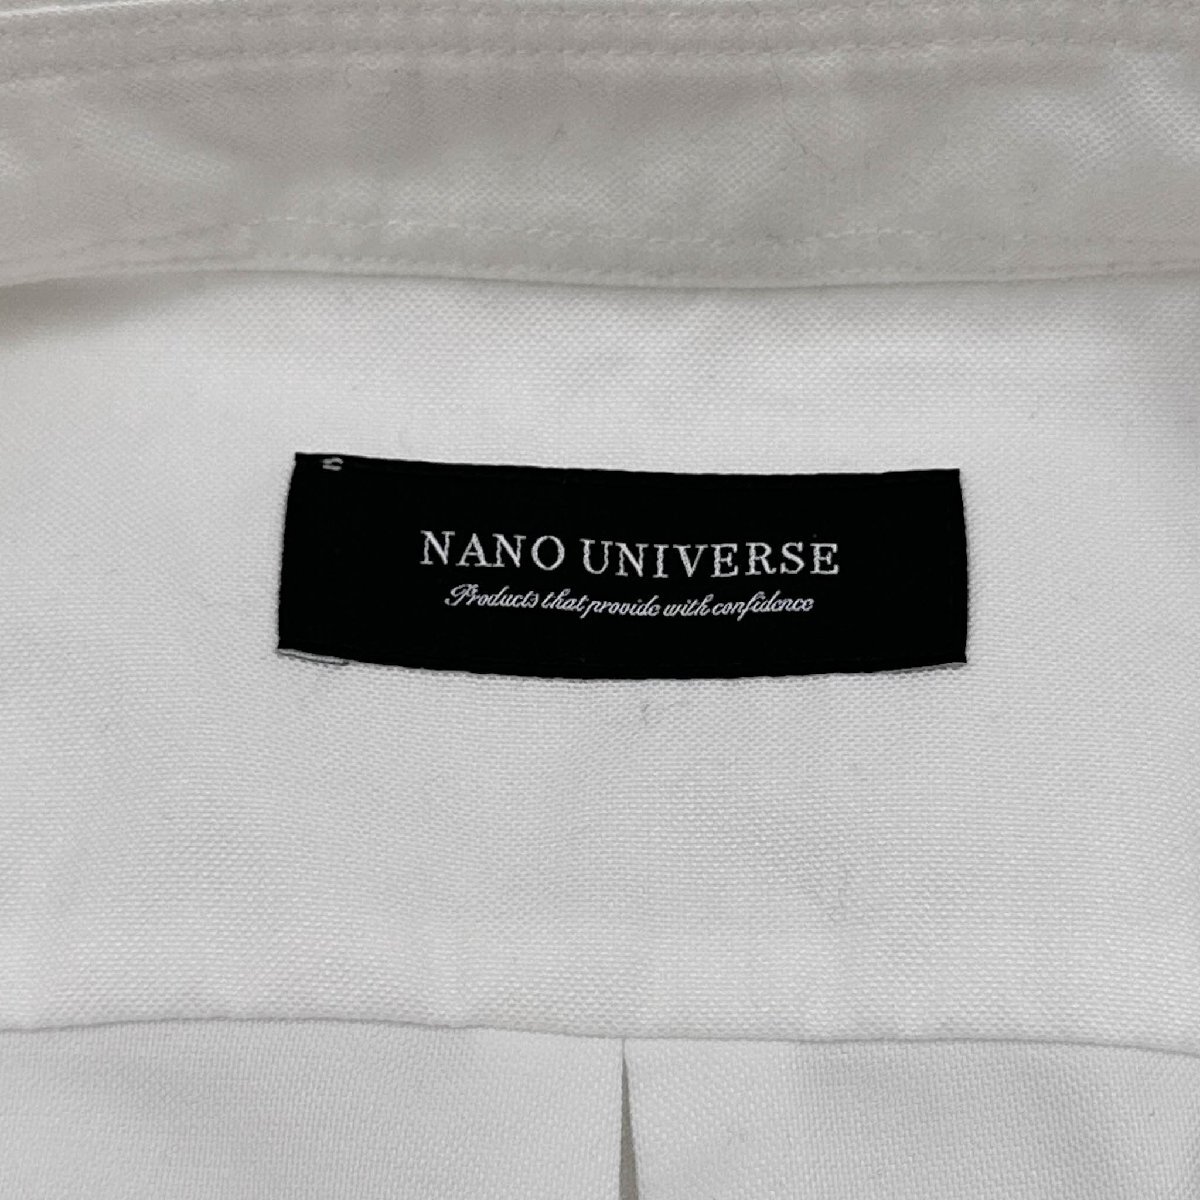 nano universe ナノユニバース ボタンダウン BD 長袖 オックスフォード シャツ XL /白/ホワイト/メンズ/ビッグサイズの画像5